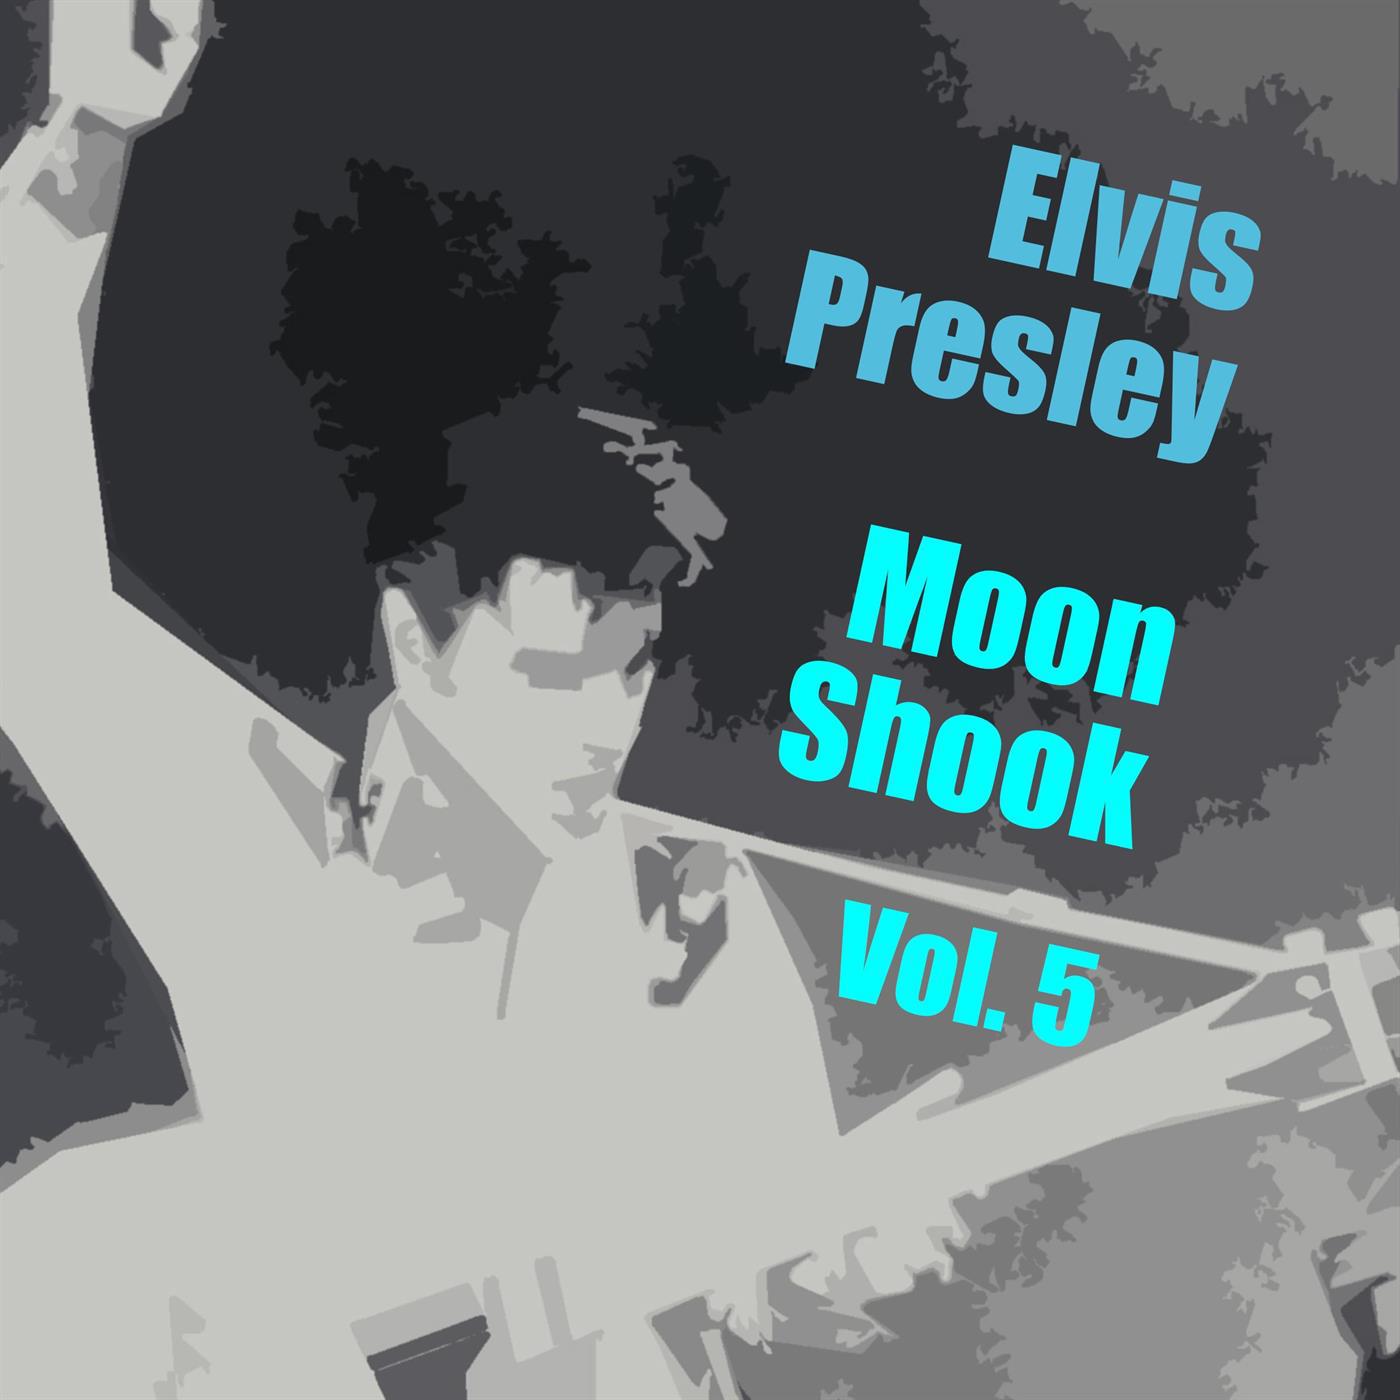 Moon Shook Vol. 5专辑